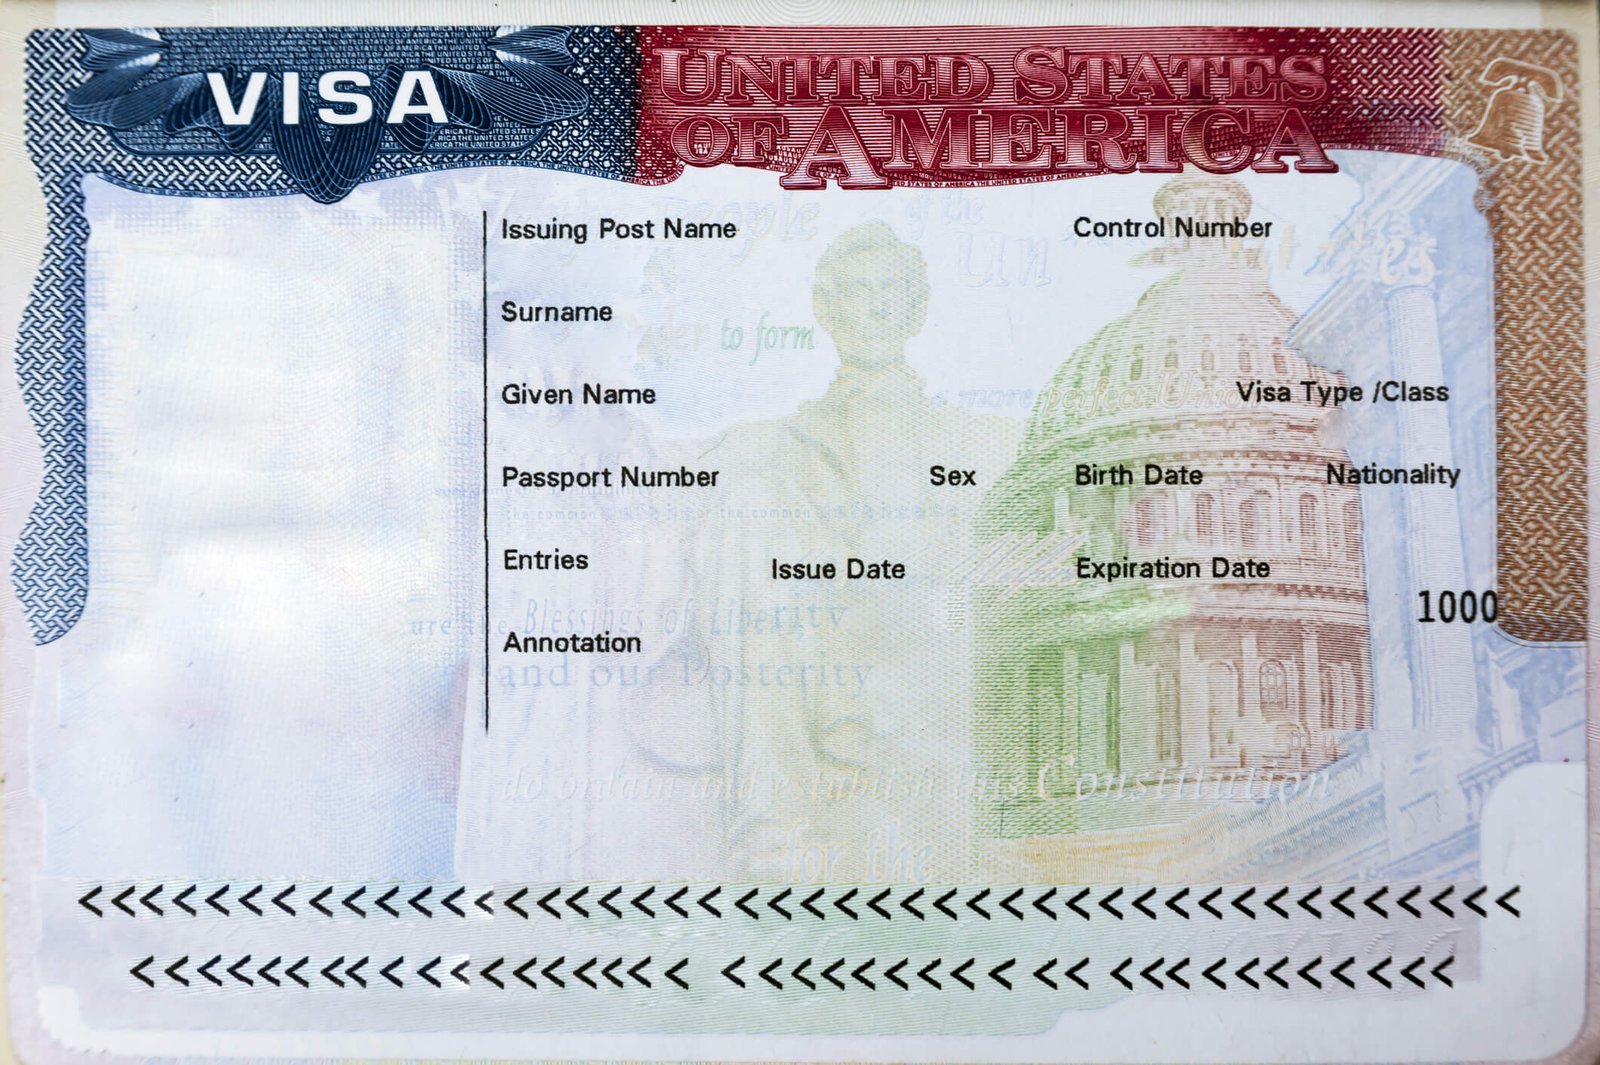 USA Visa photo requirements U.S.A. Visa photo How to apply for U.S.A. Visa photo